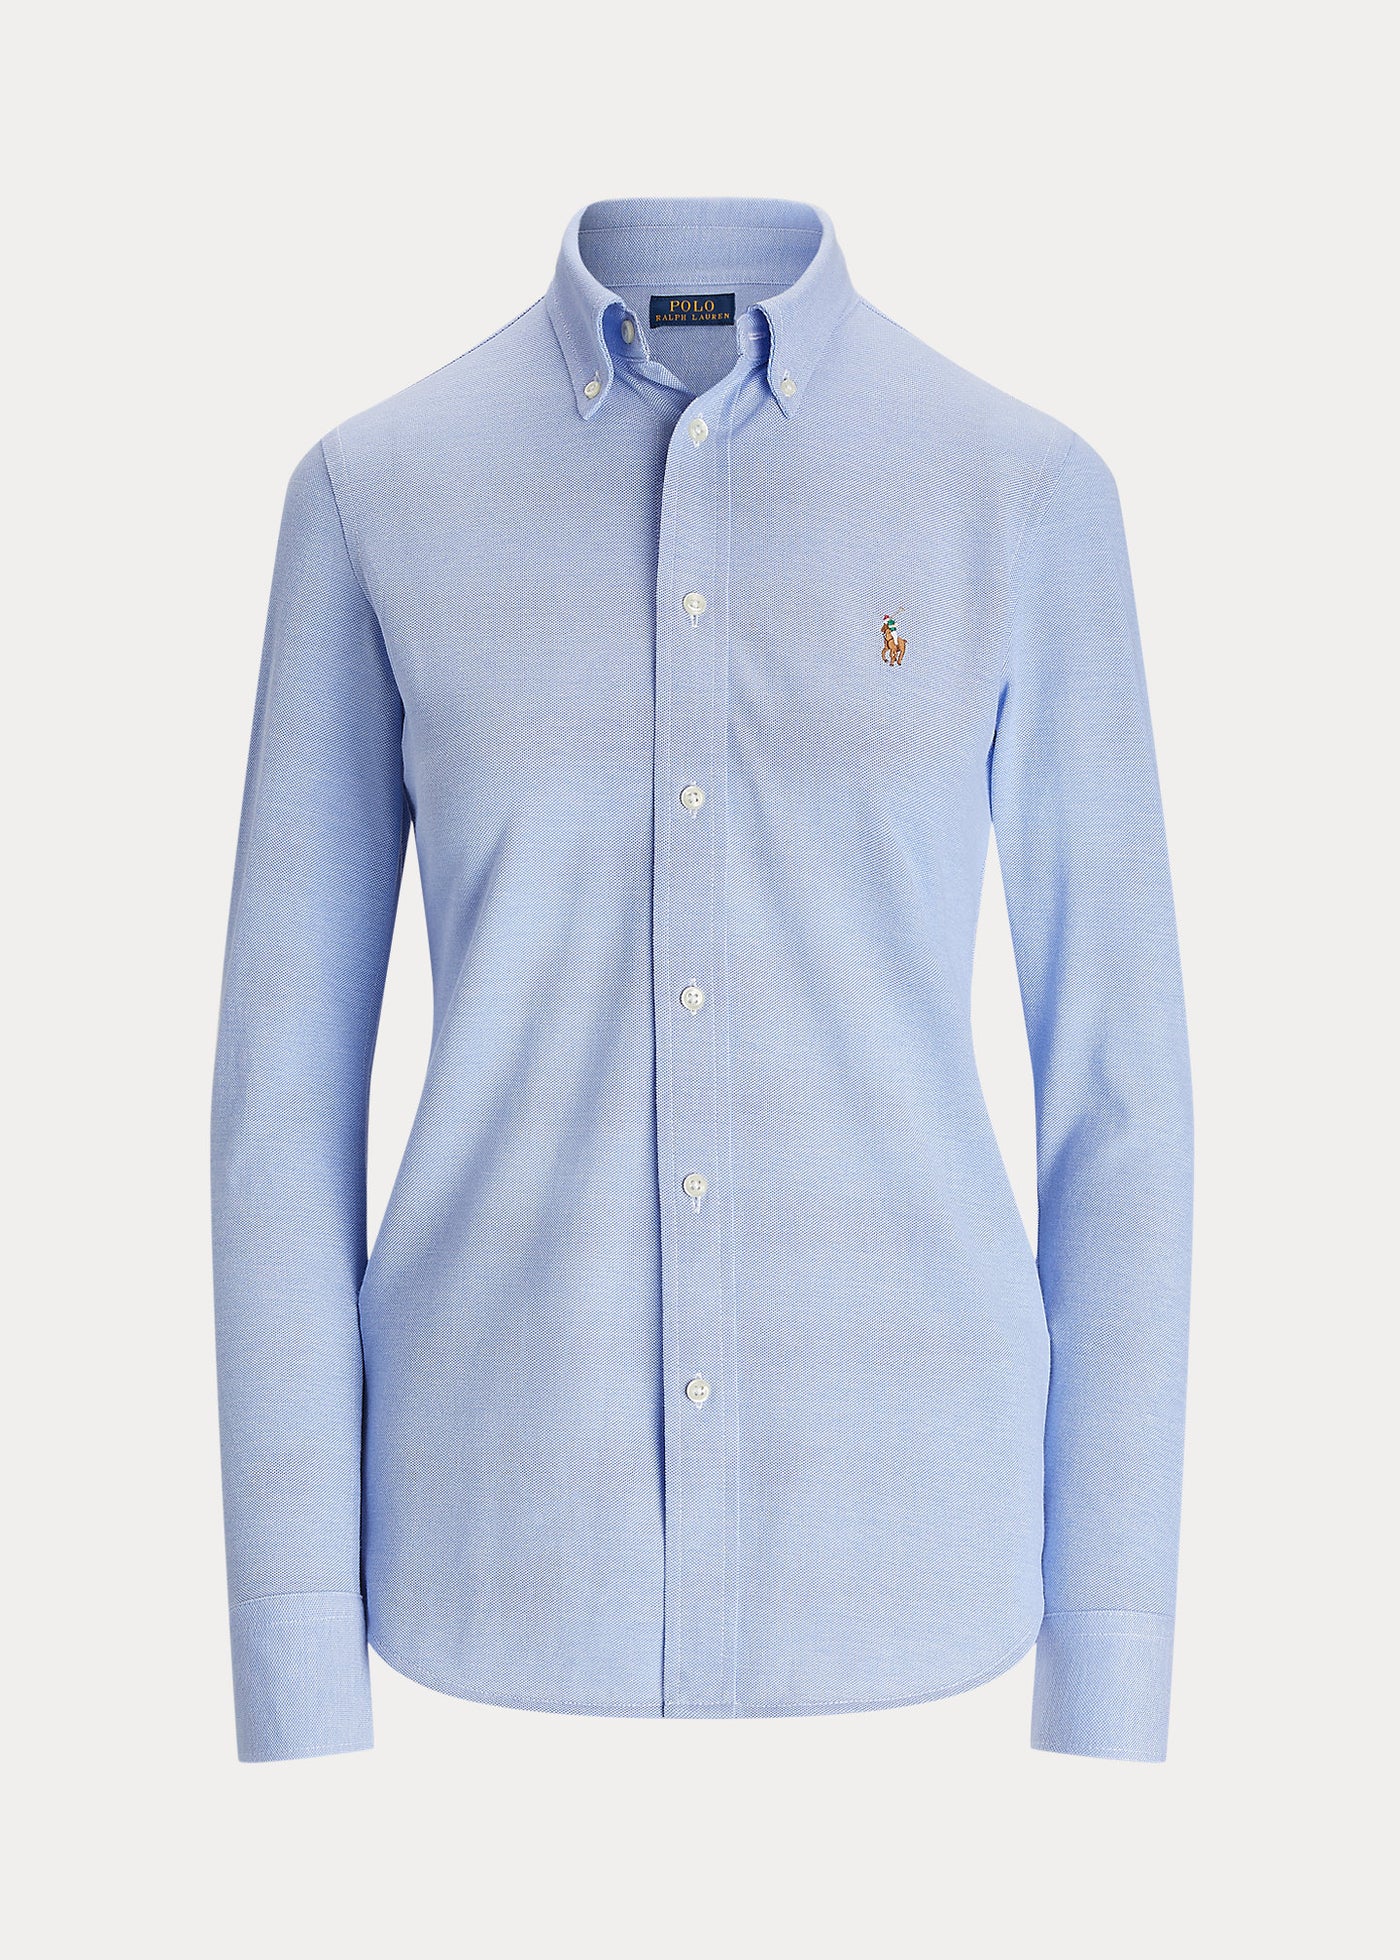 Ralph Lauren Knit Cotton Oxford Shirt | Harbor Blue